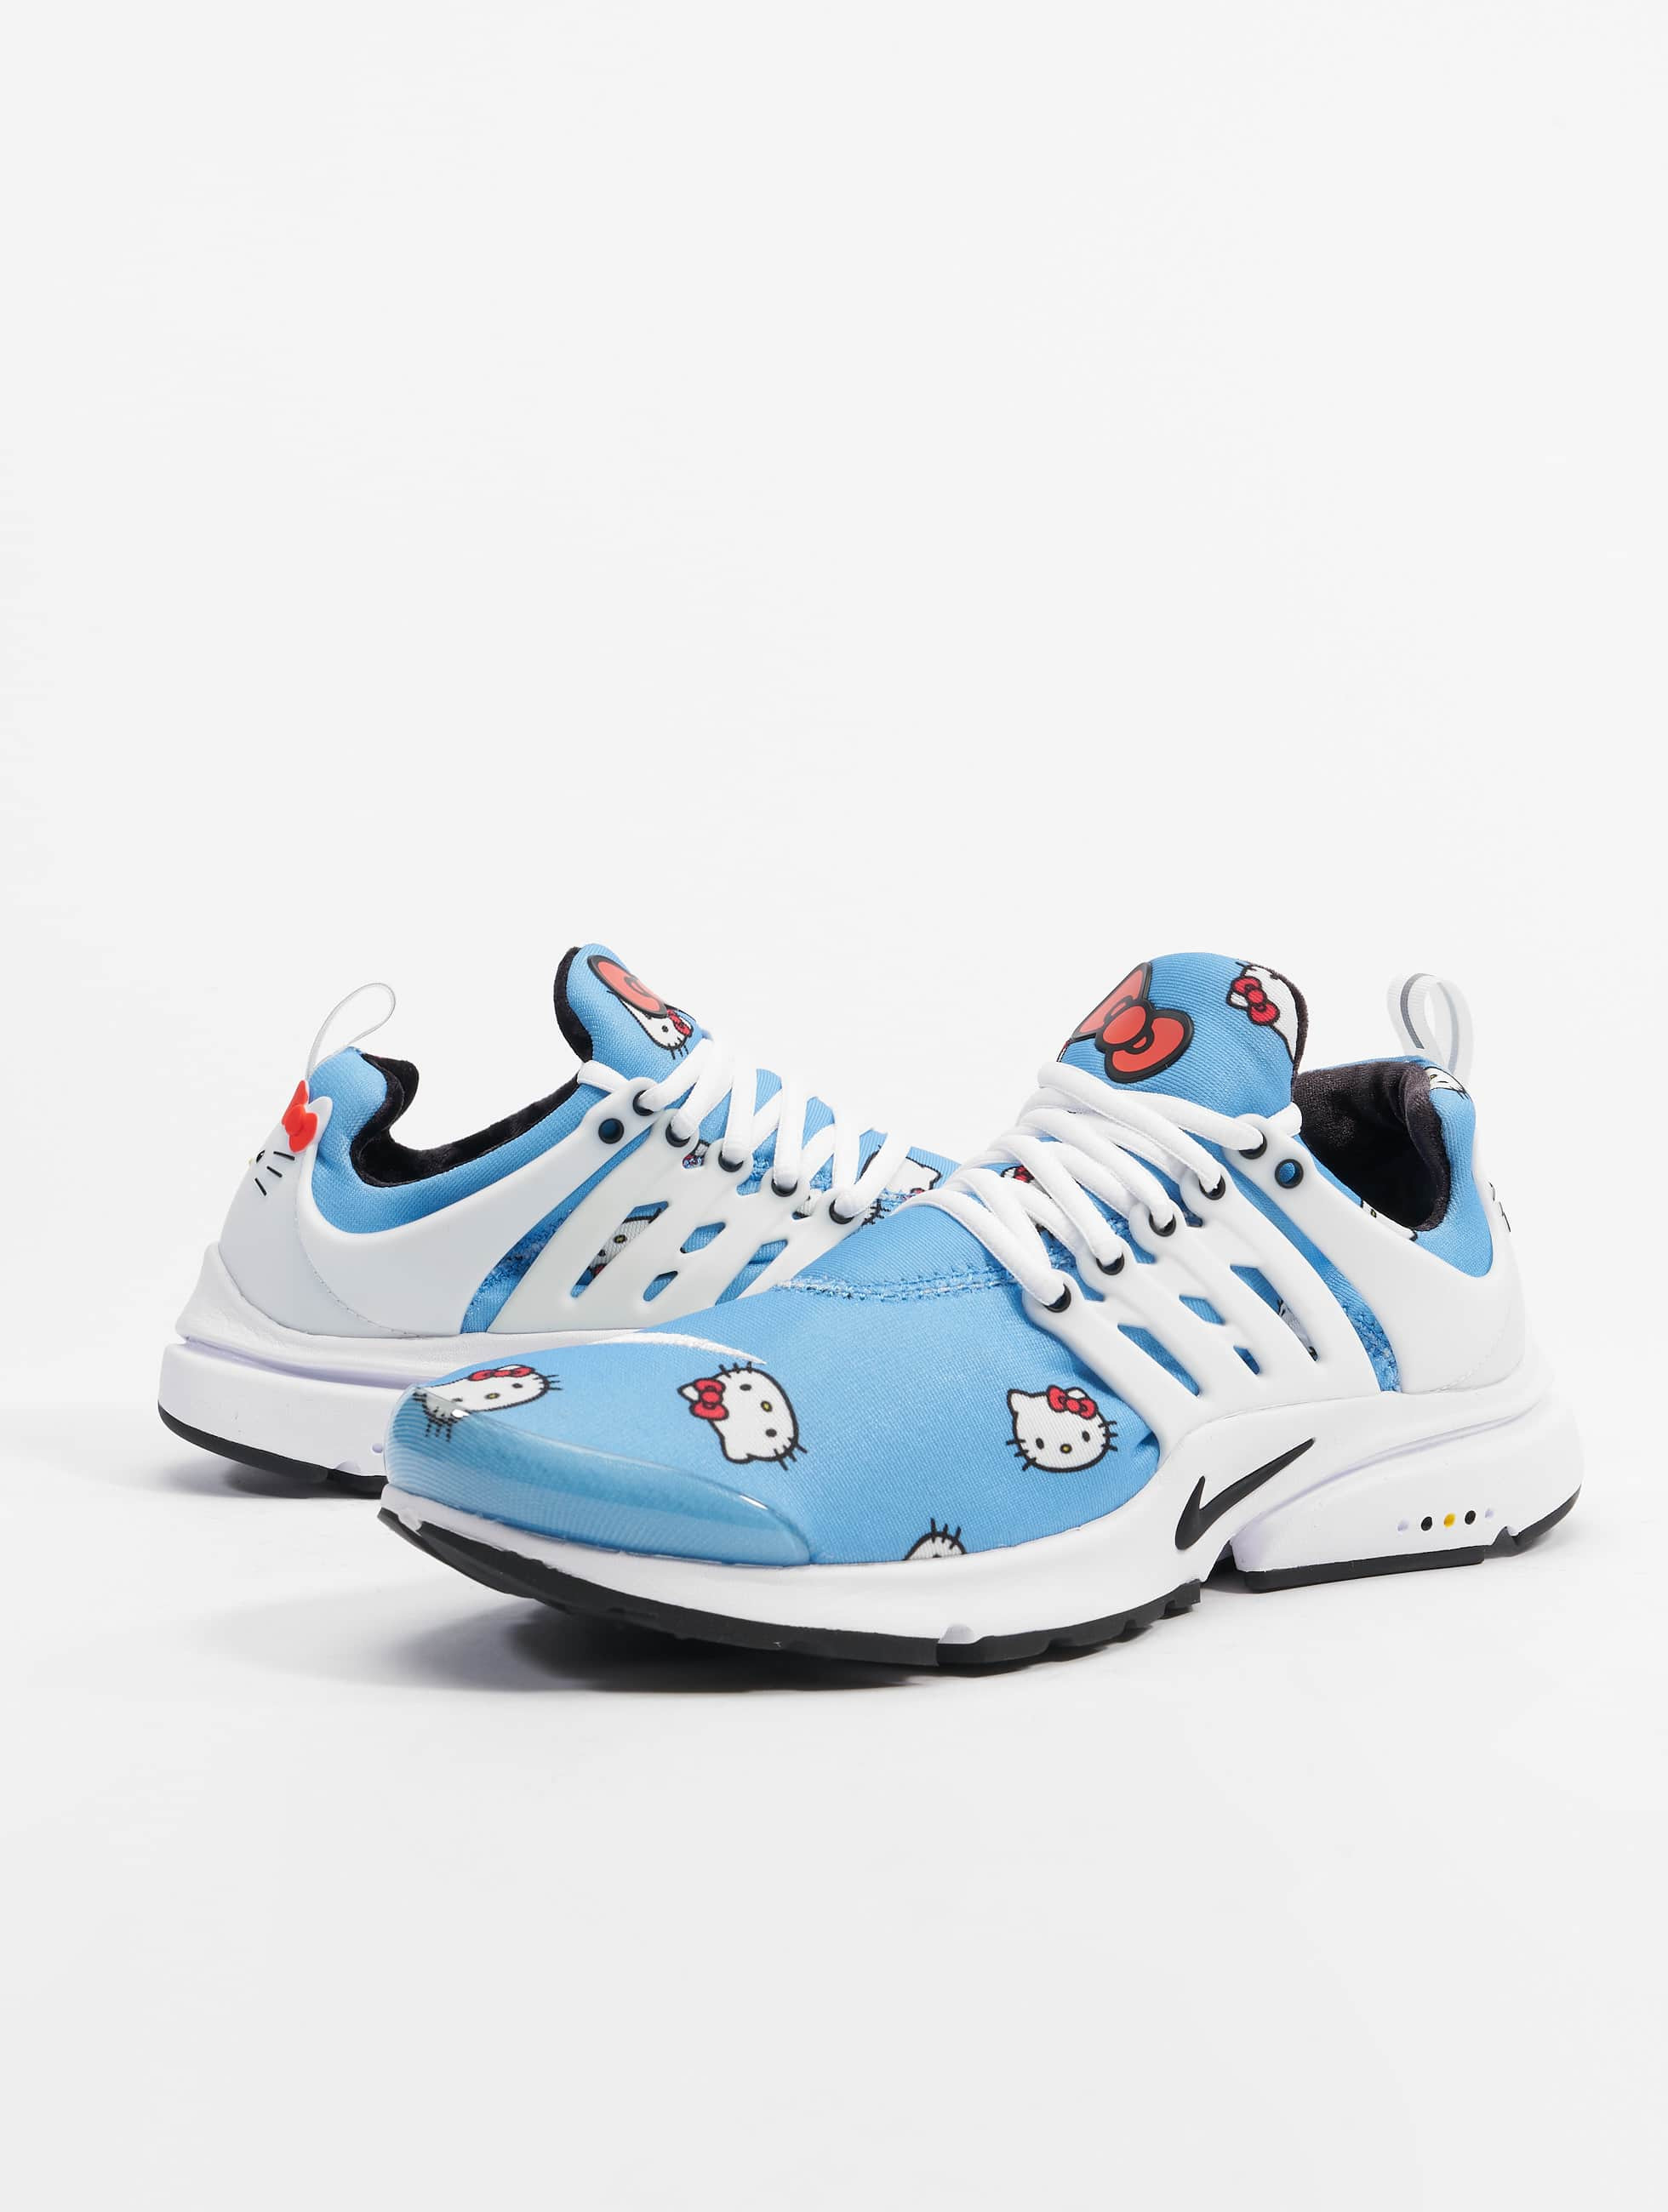 Sko / Sneakers Air Presto Qs i blå